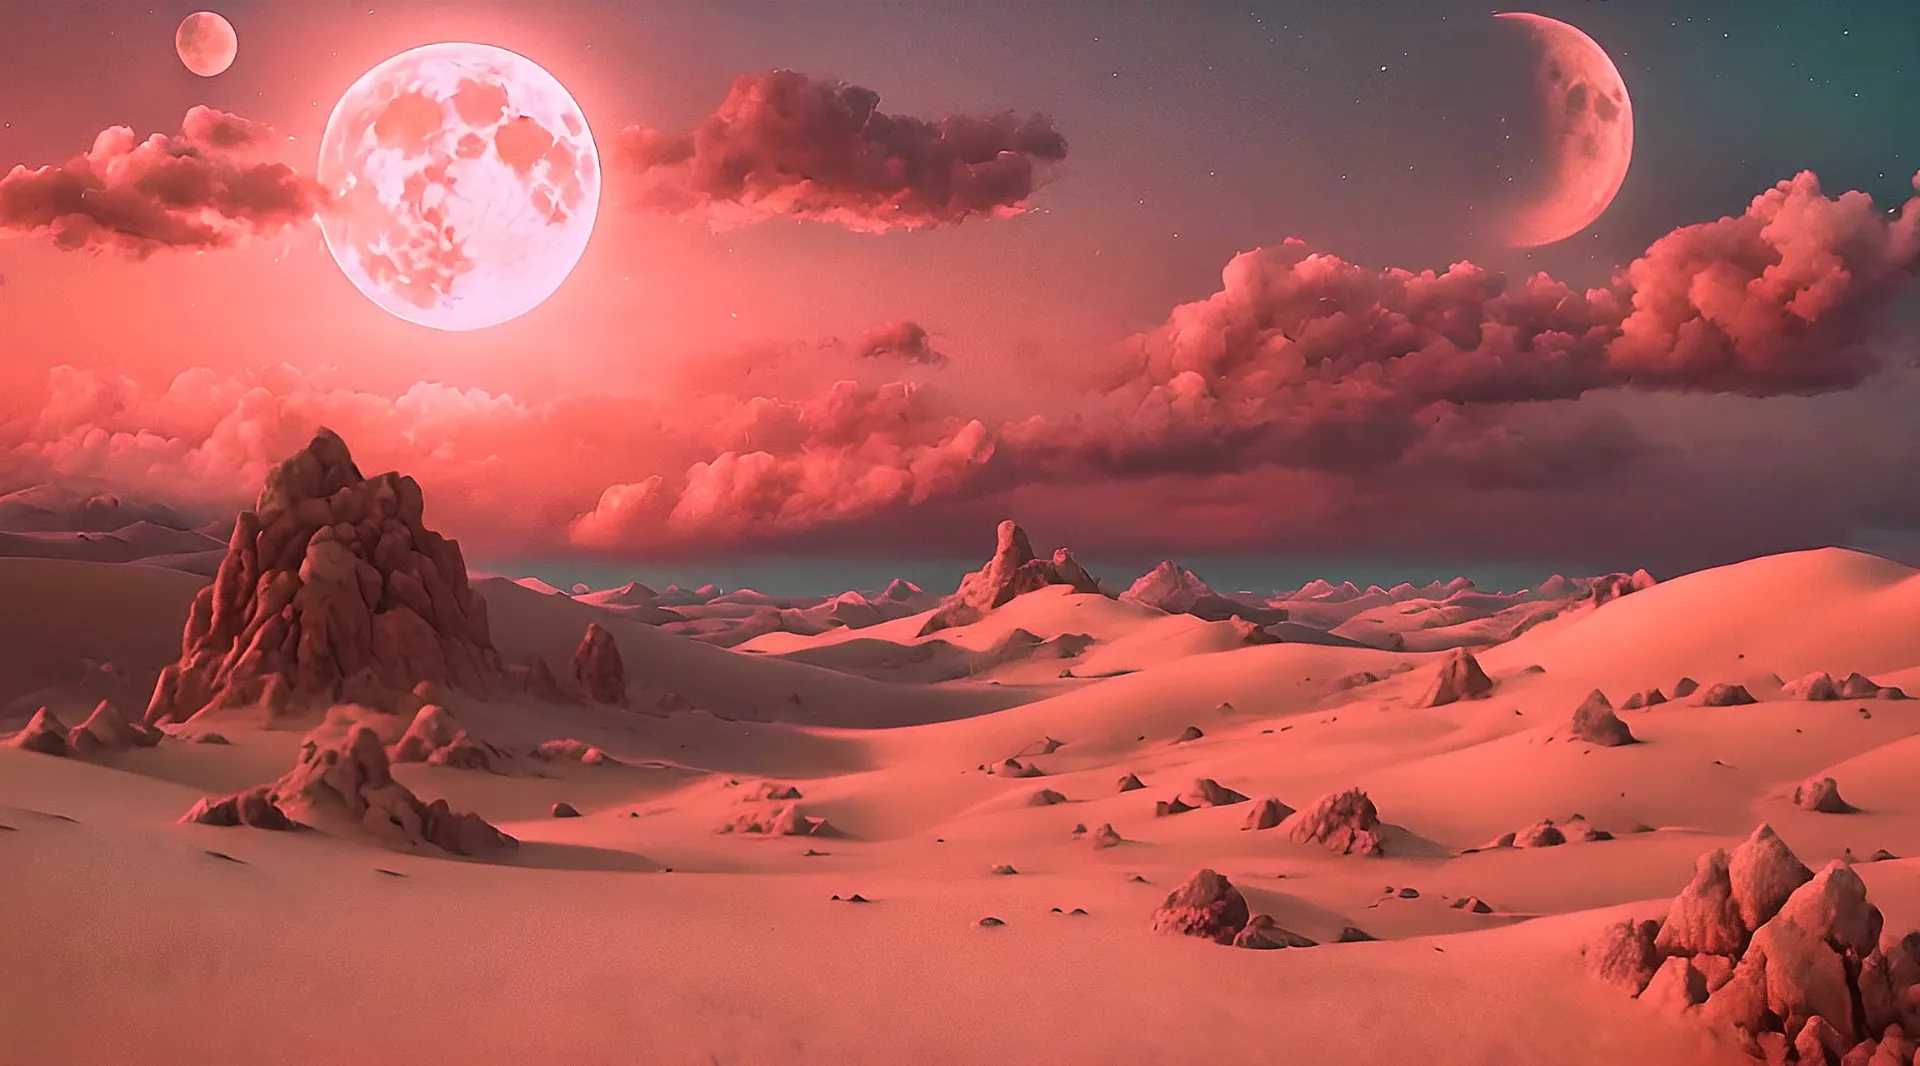 Surreal Pink Moons over Desert Sci-Fi Backdrop